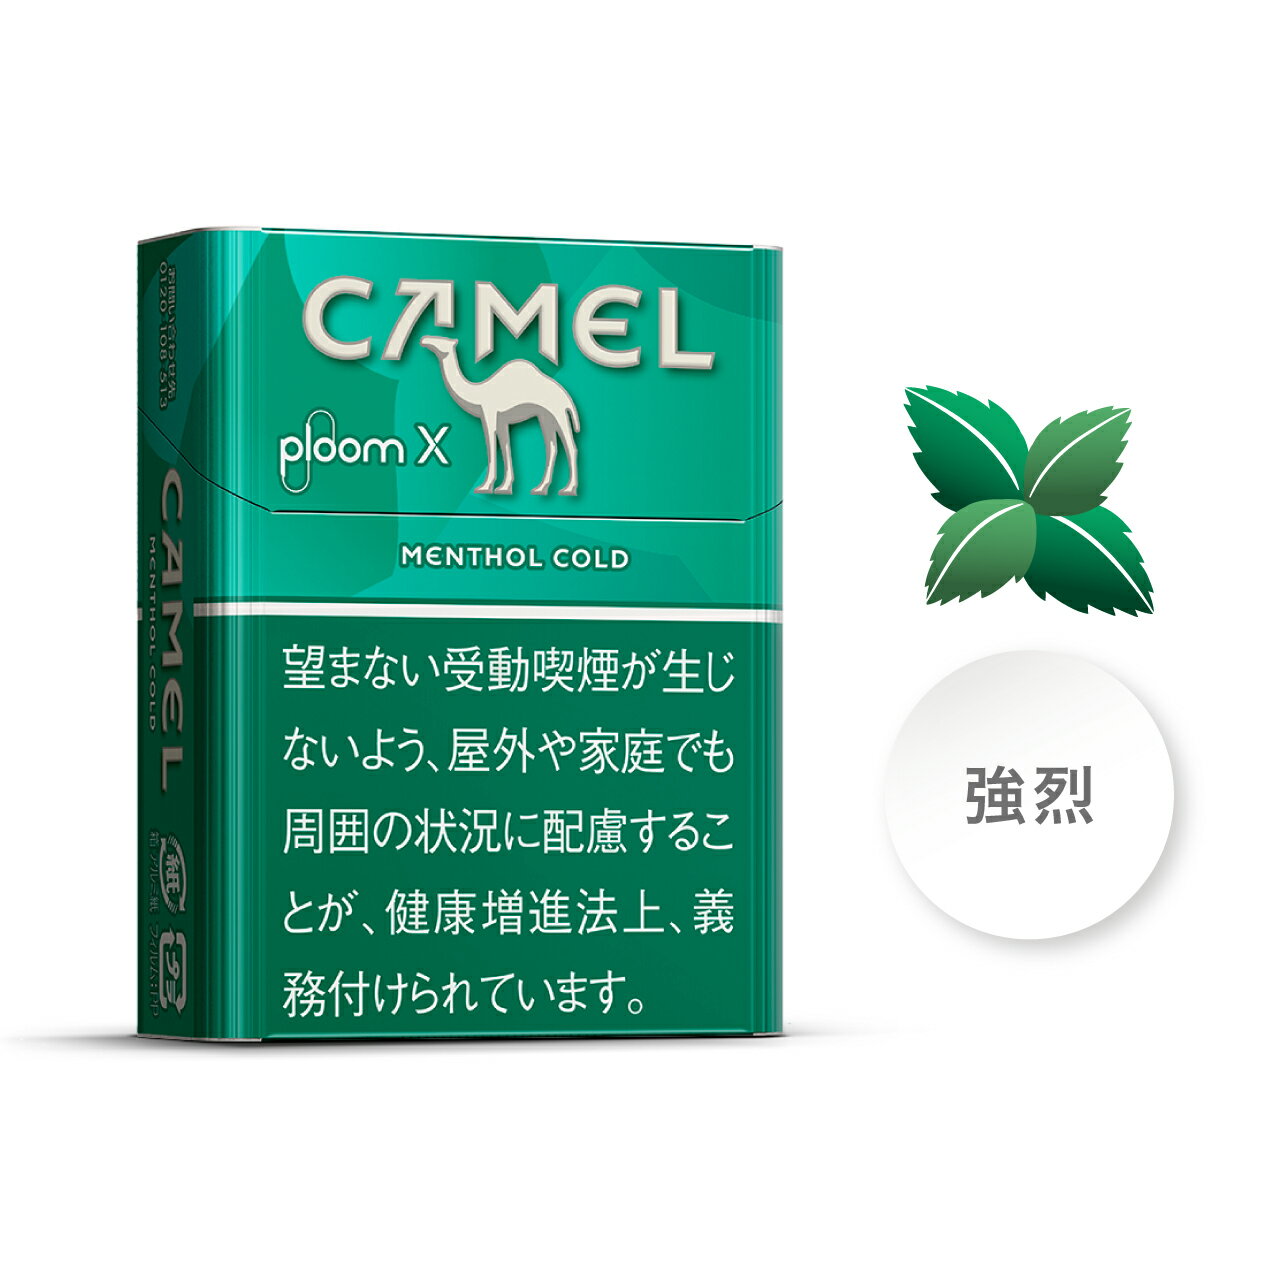 Camel Menthol Cold Ploom X :2{snus 1000yen:2